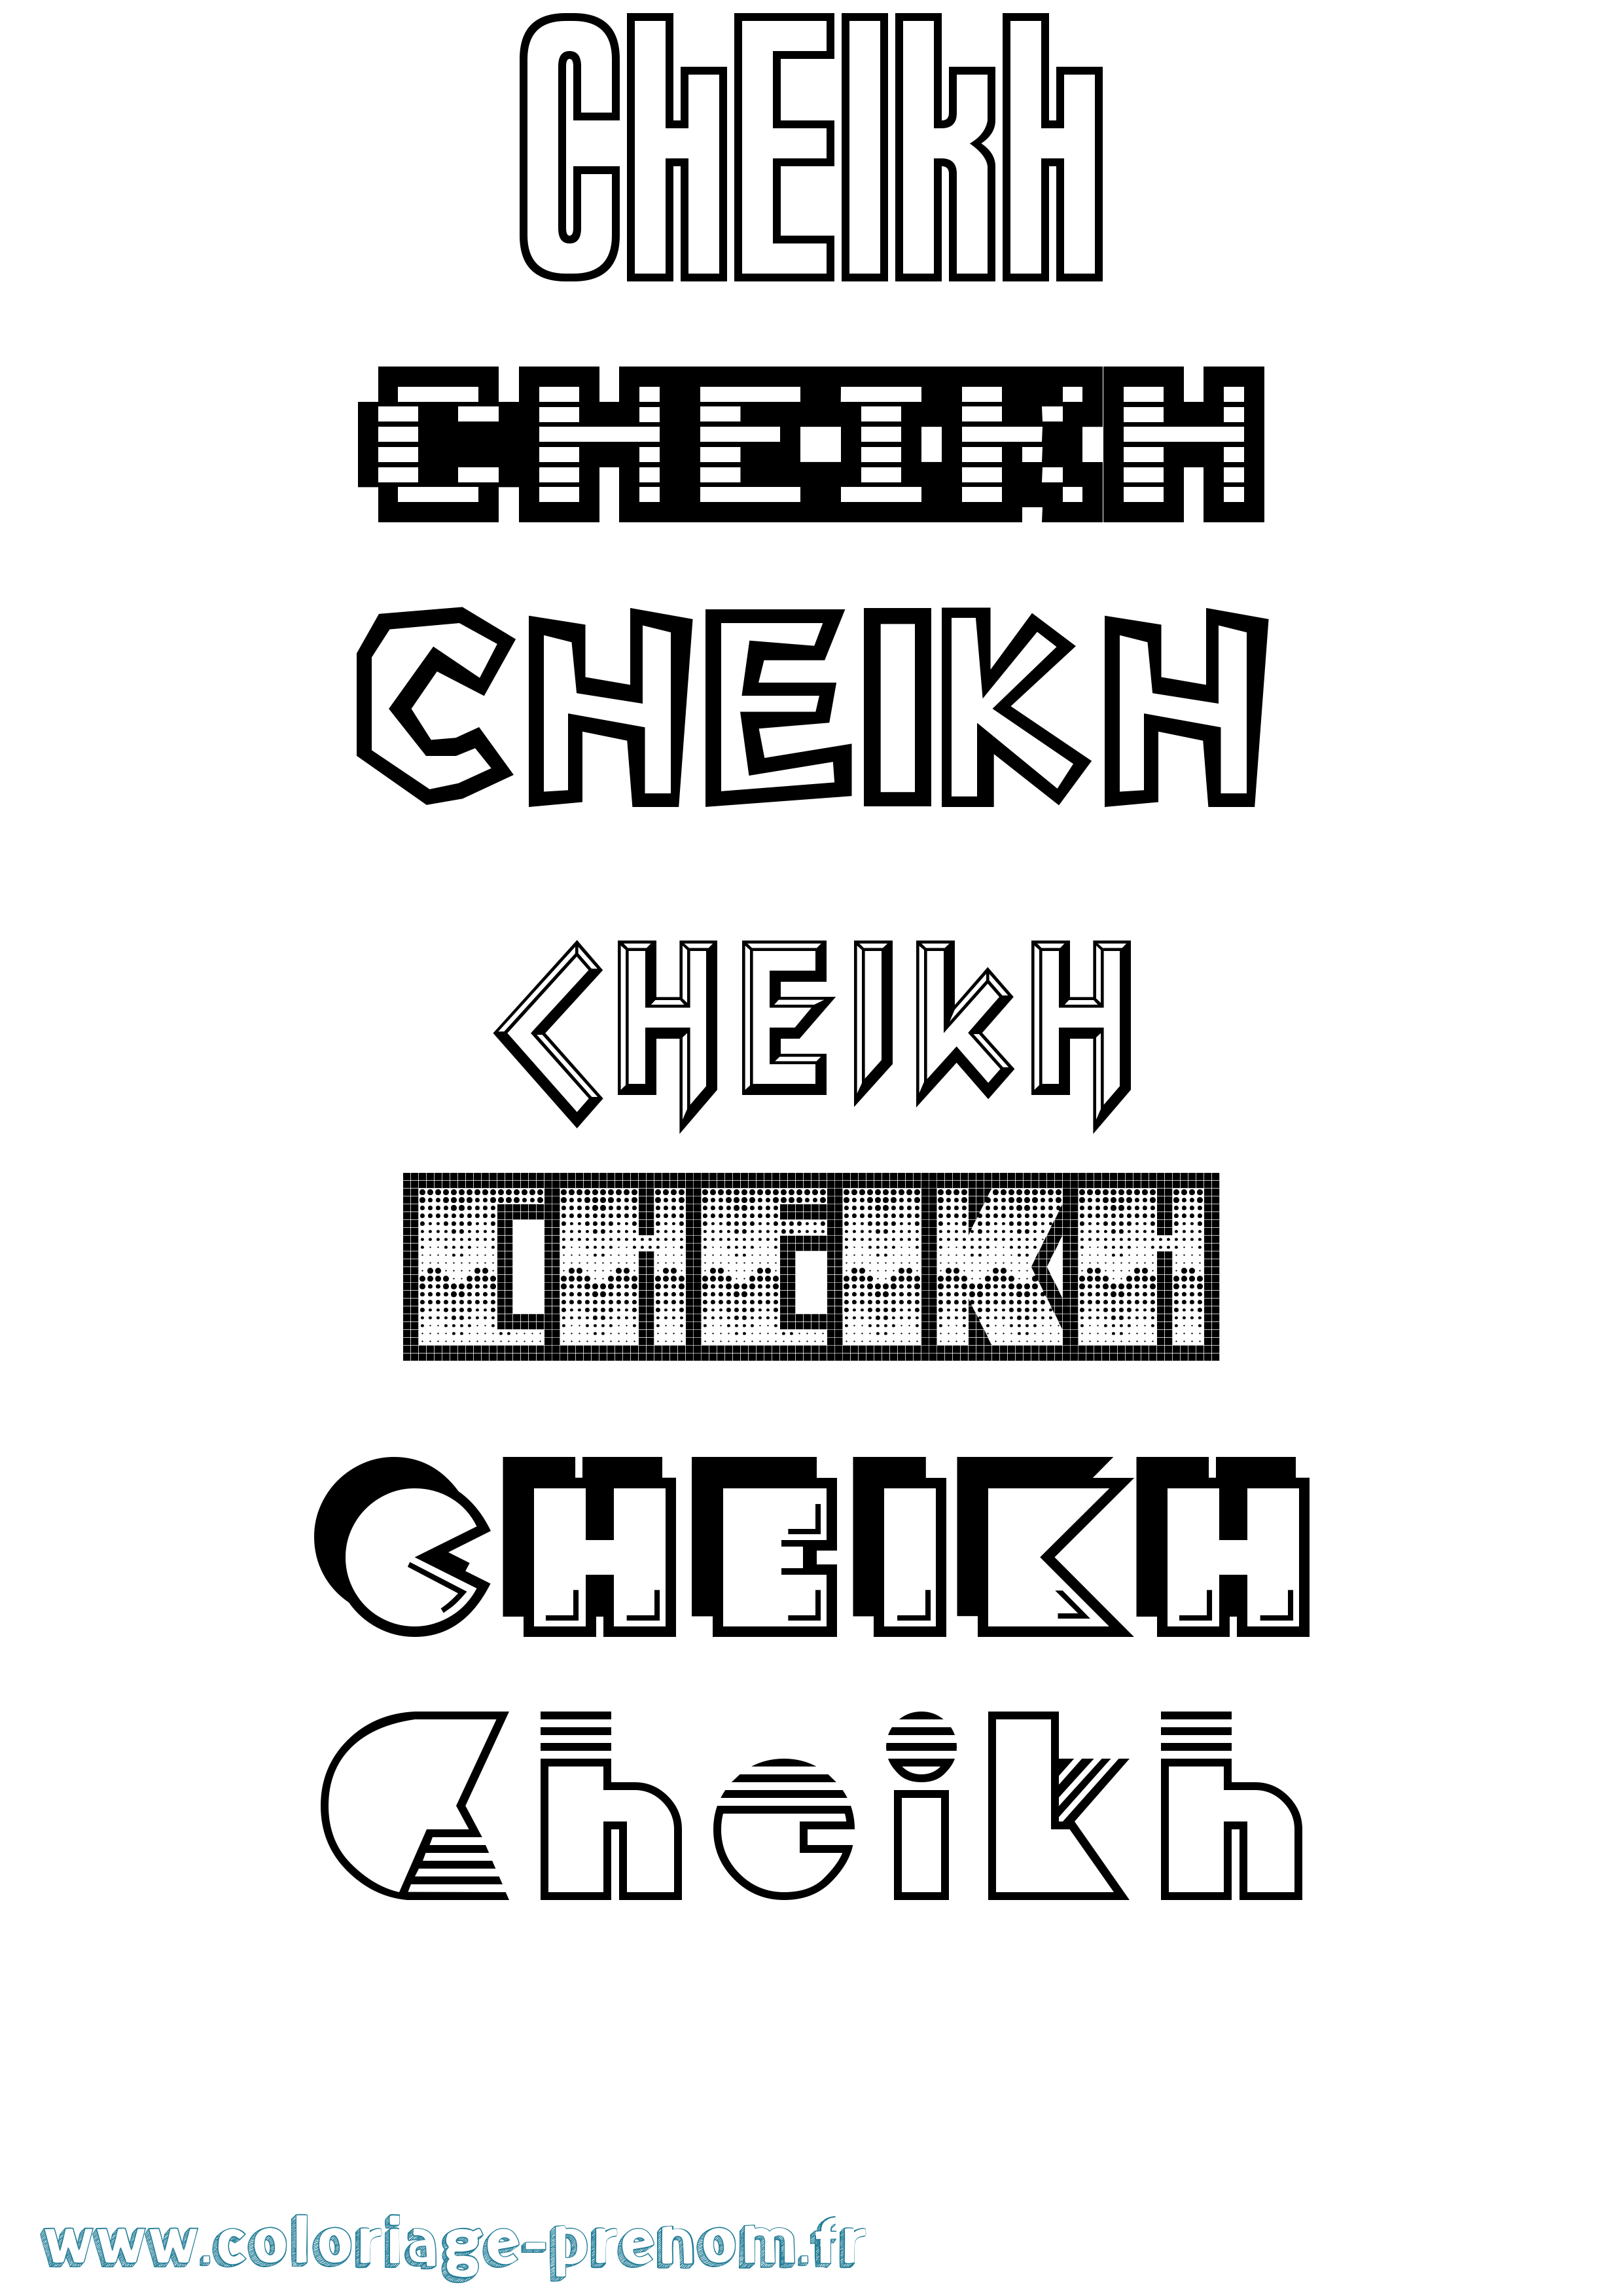 Coloriage prénom Cheikh